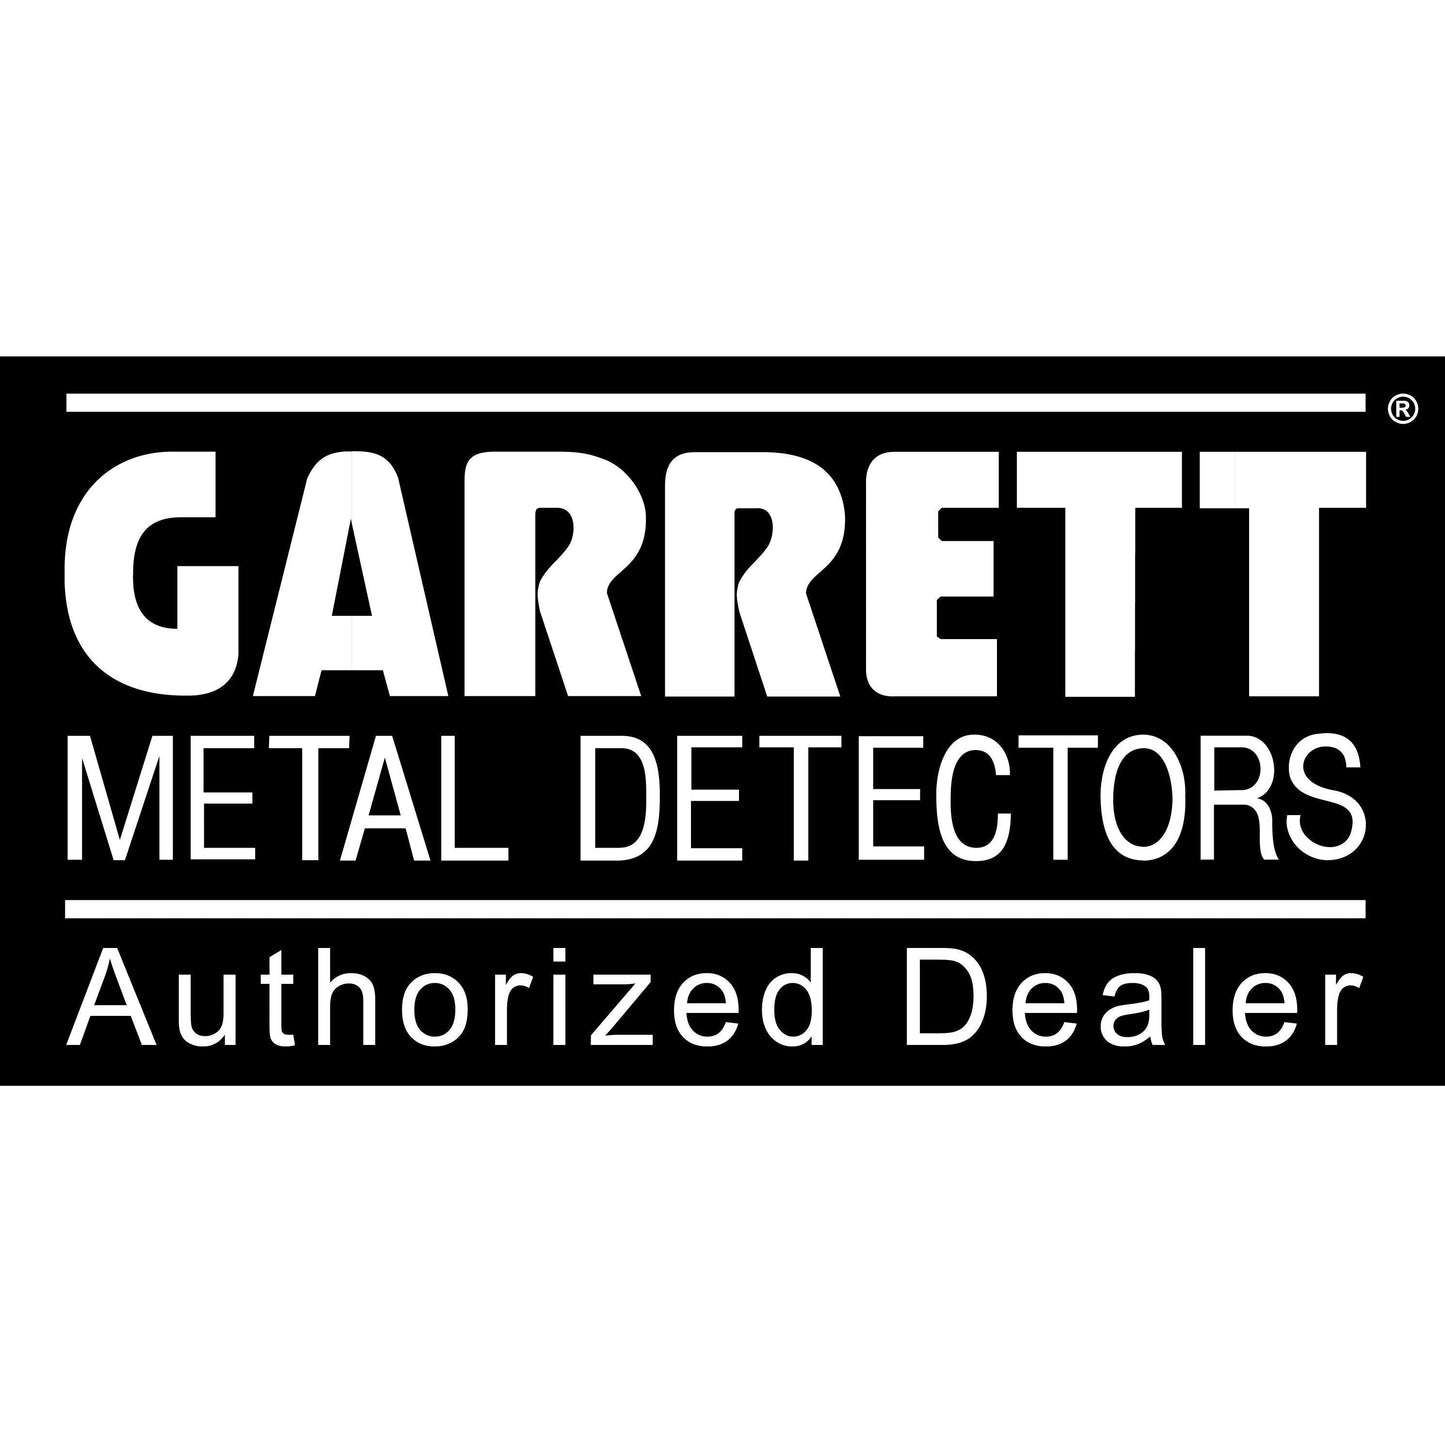 Garrett MS-3 Z-Lynk Wireless Kit-Destination Gold Detectors